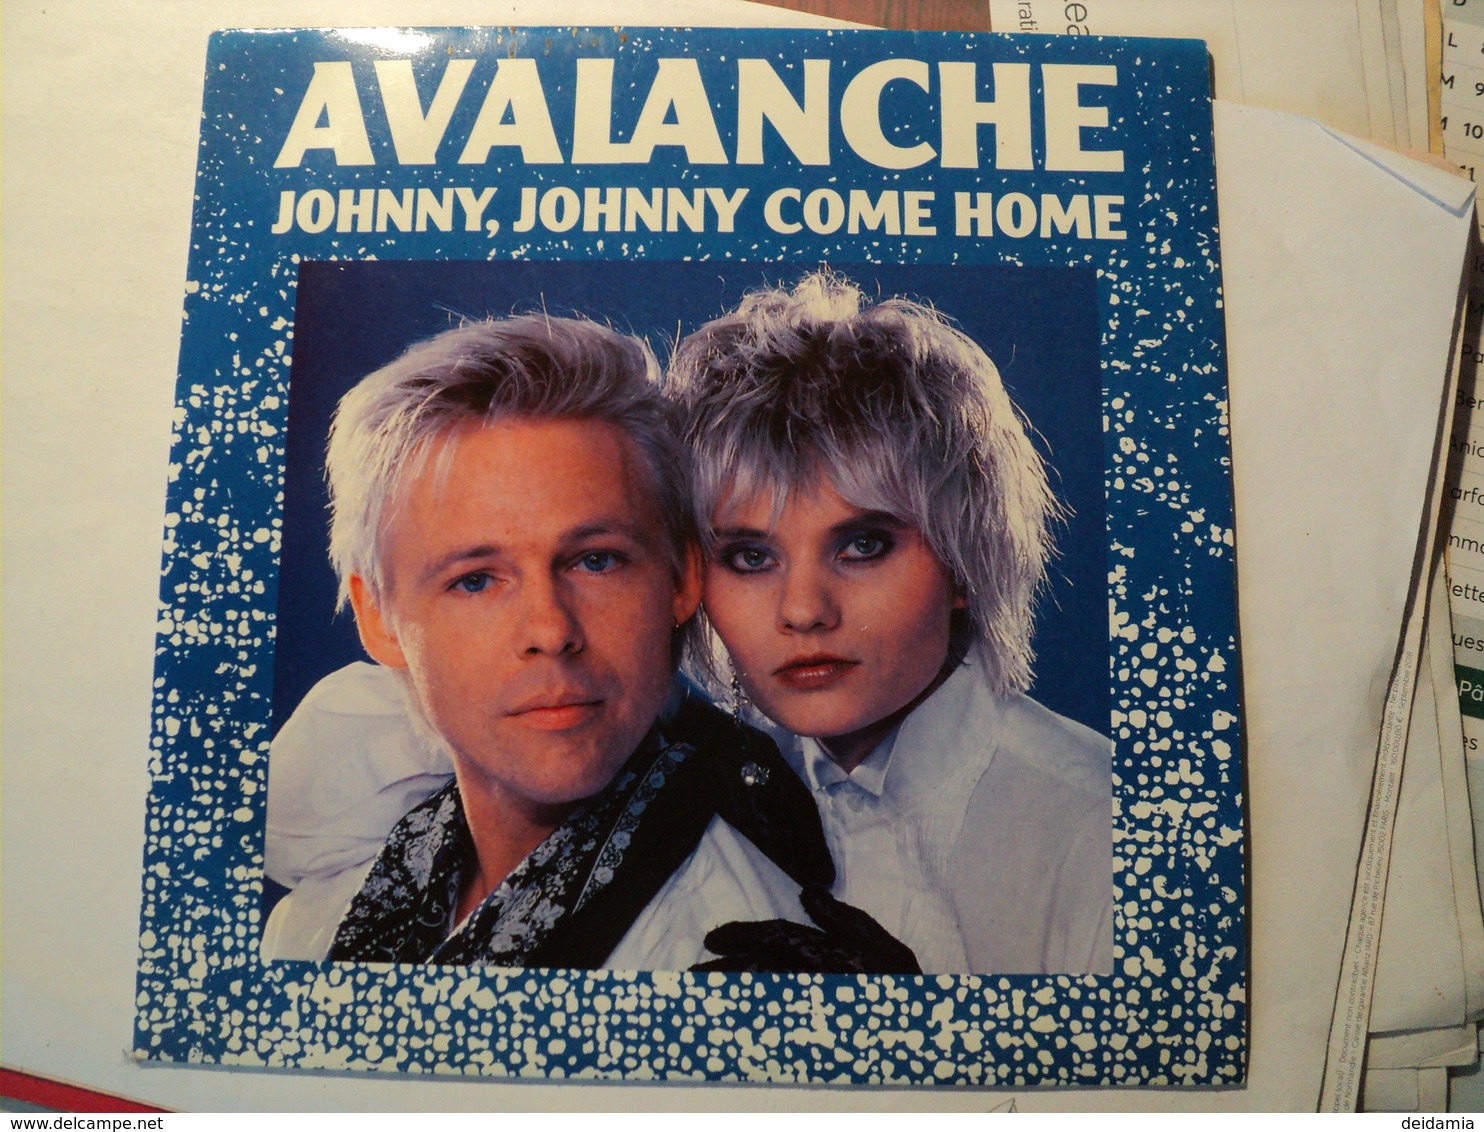 45 TOURS AVALANCHE. 1988. JOHNNY JOHNNY COME HOME / VERSION DANCE MIX WEA 247 486 7. ARTISTES CREDITES JOEY WILD THE HA - Disco, Pop